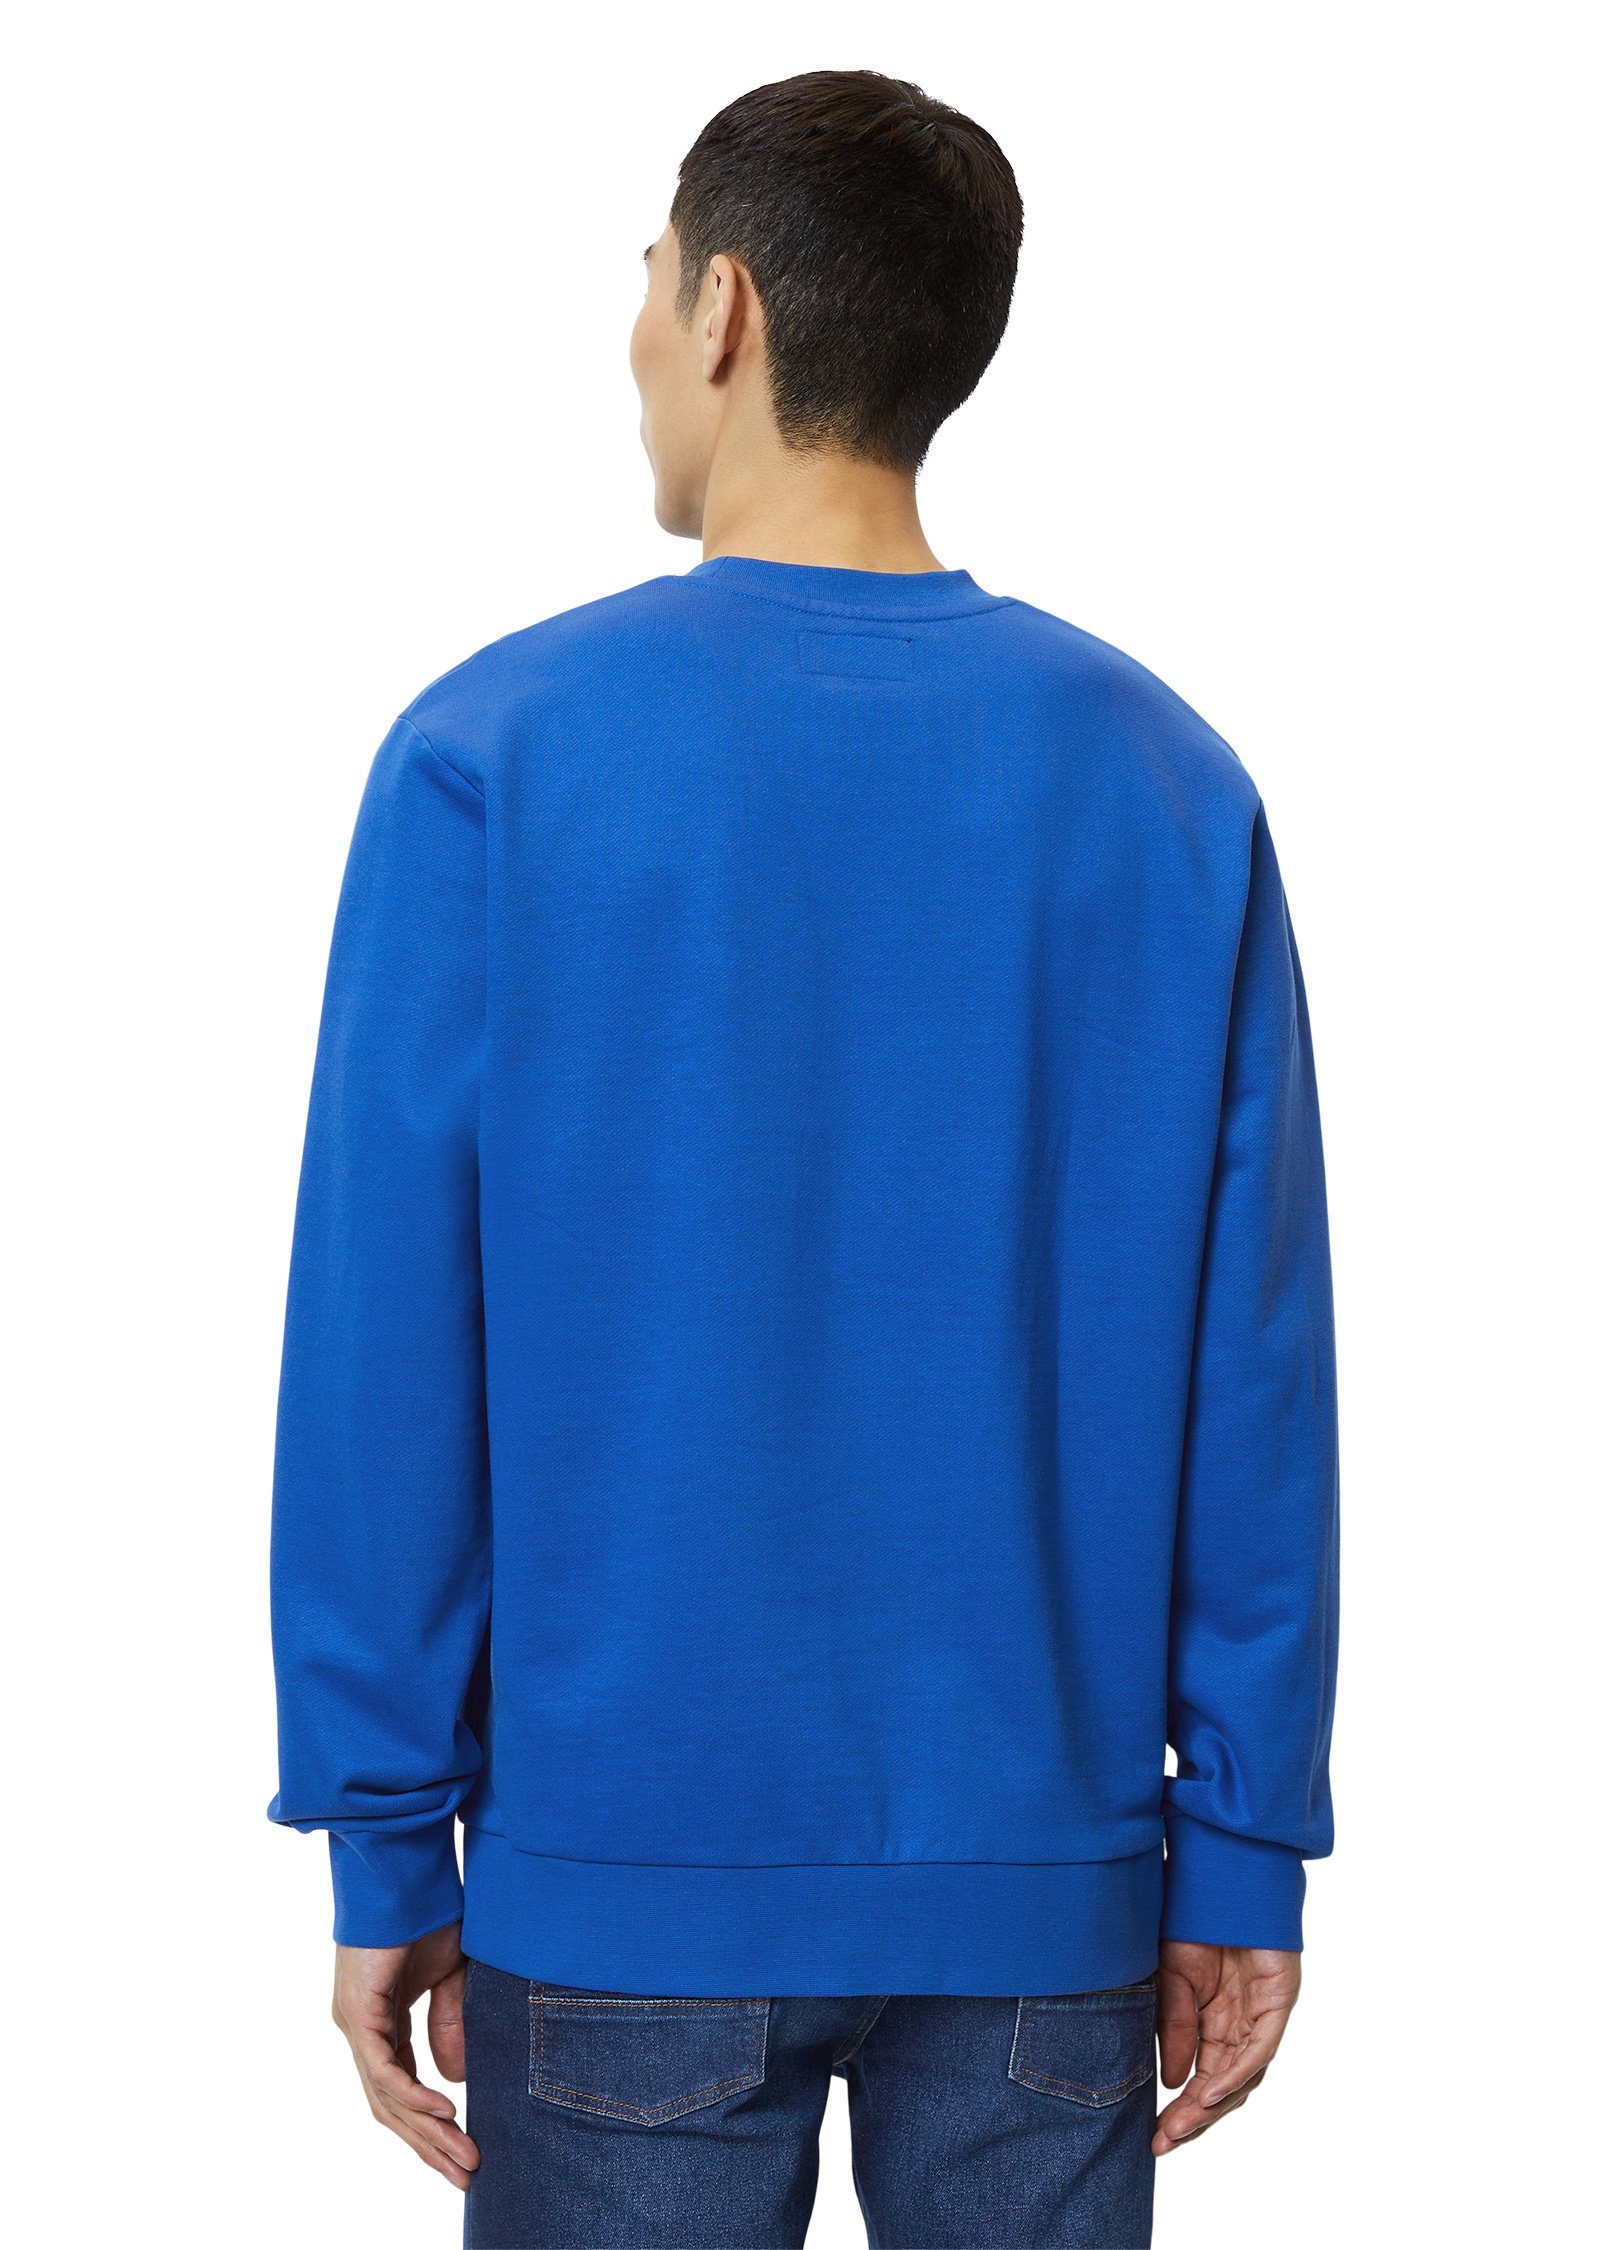 blau Bio-Baumwolle Marc O'Polo Sweatshirt aus reiner